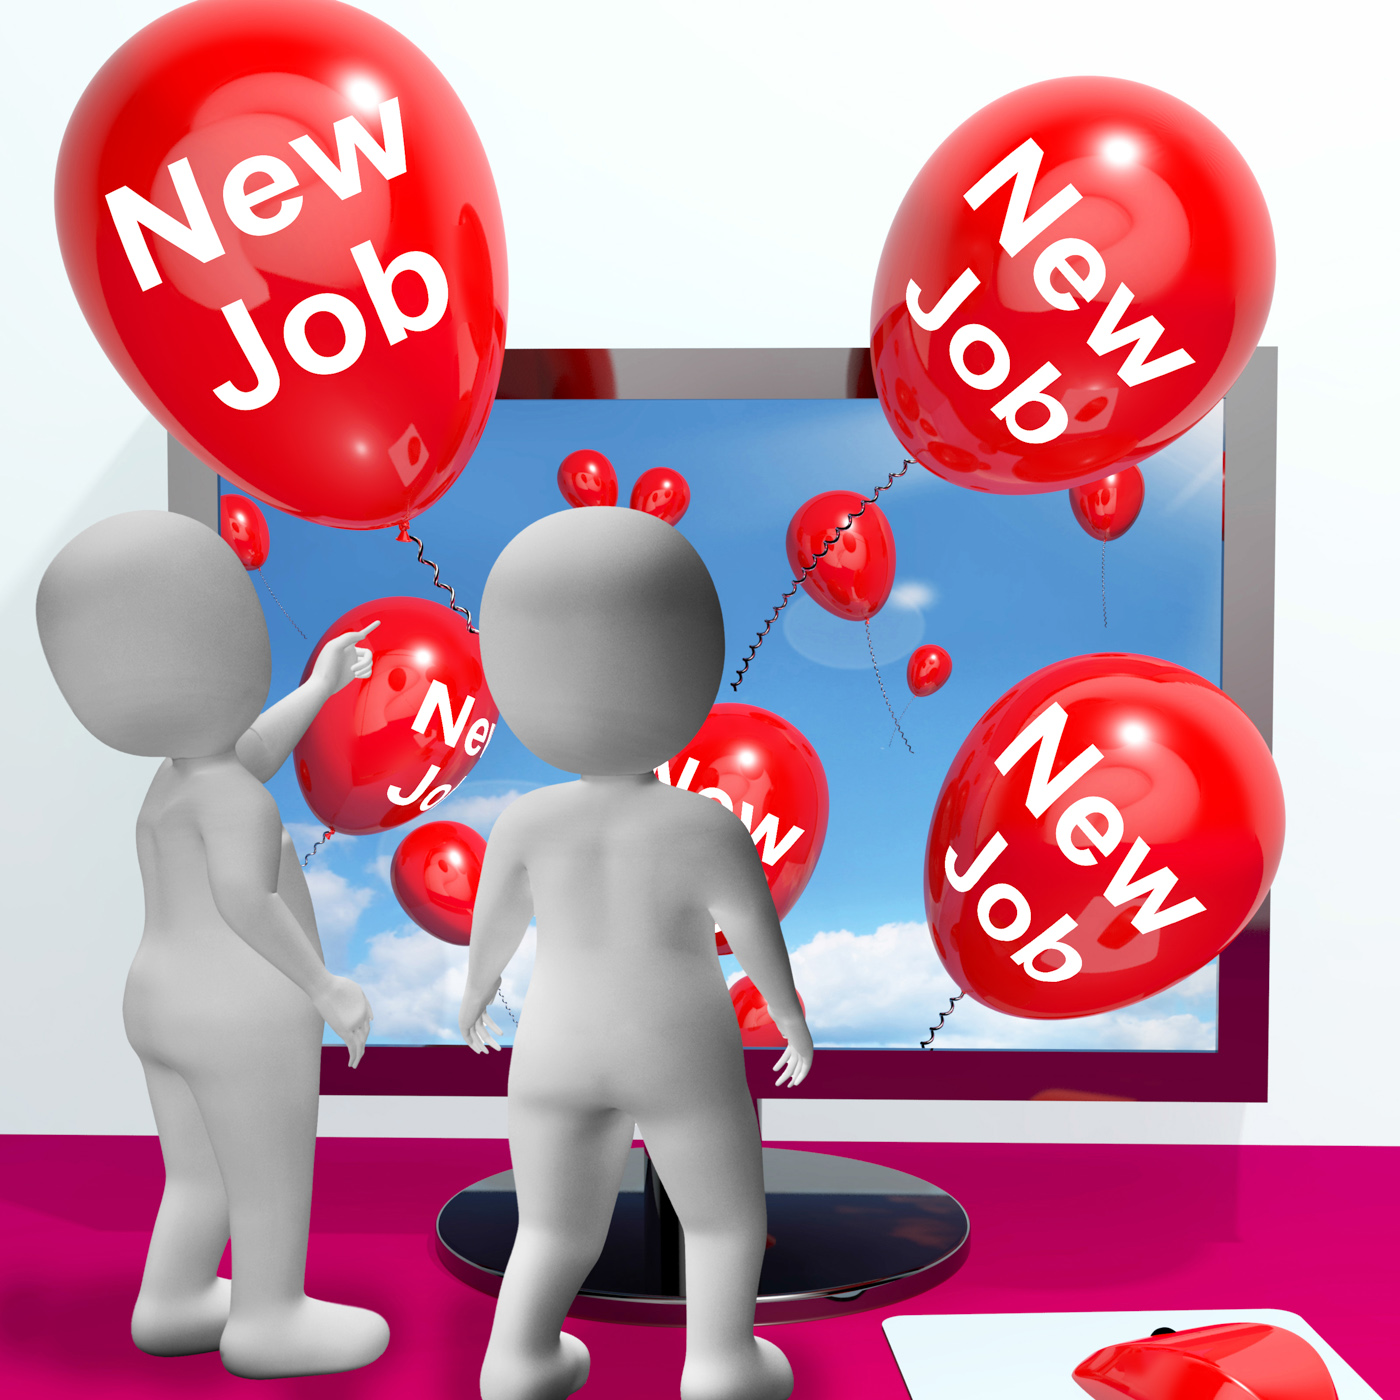 New job balloons show online congratulations for new jobs photo